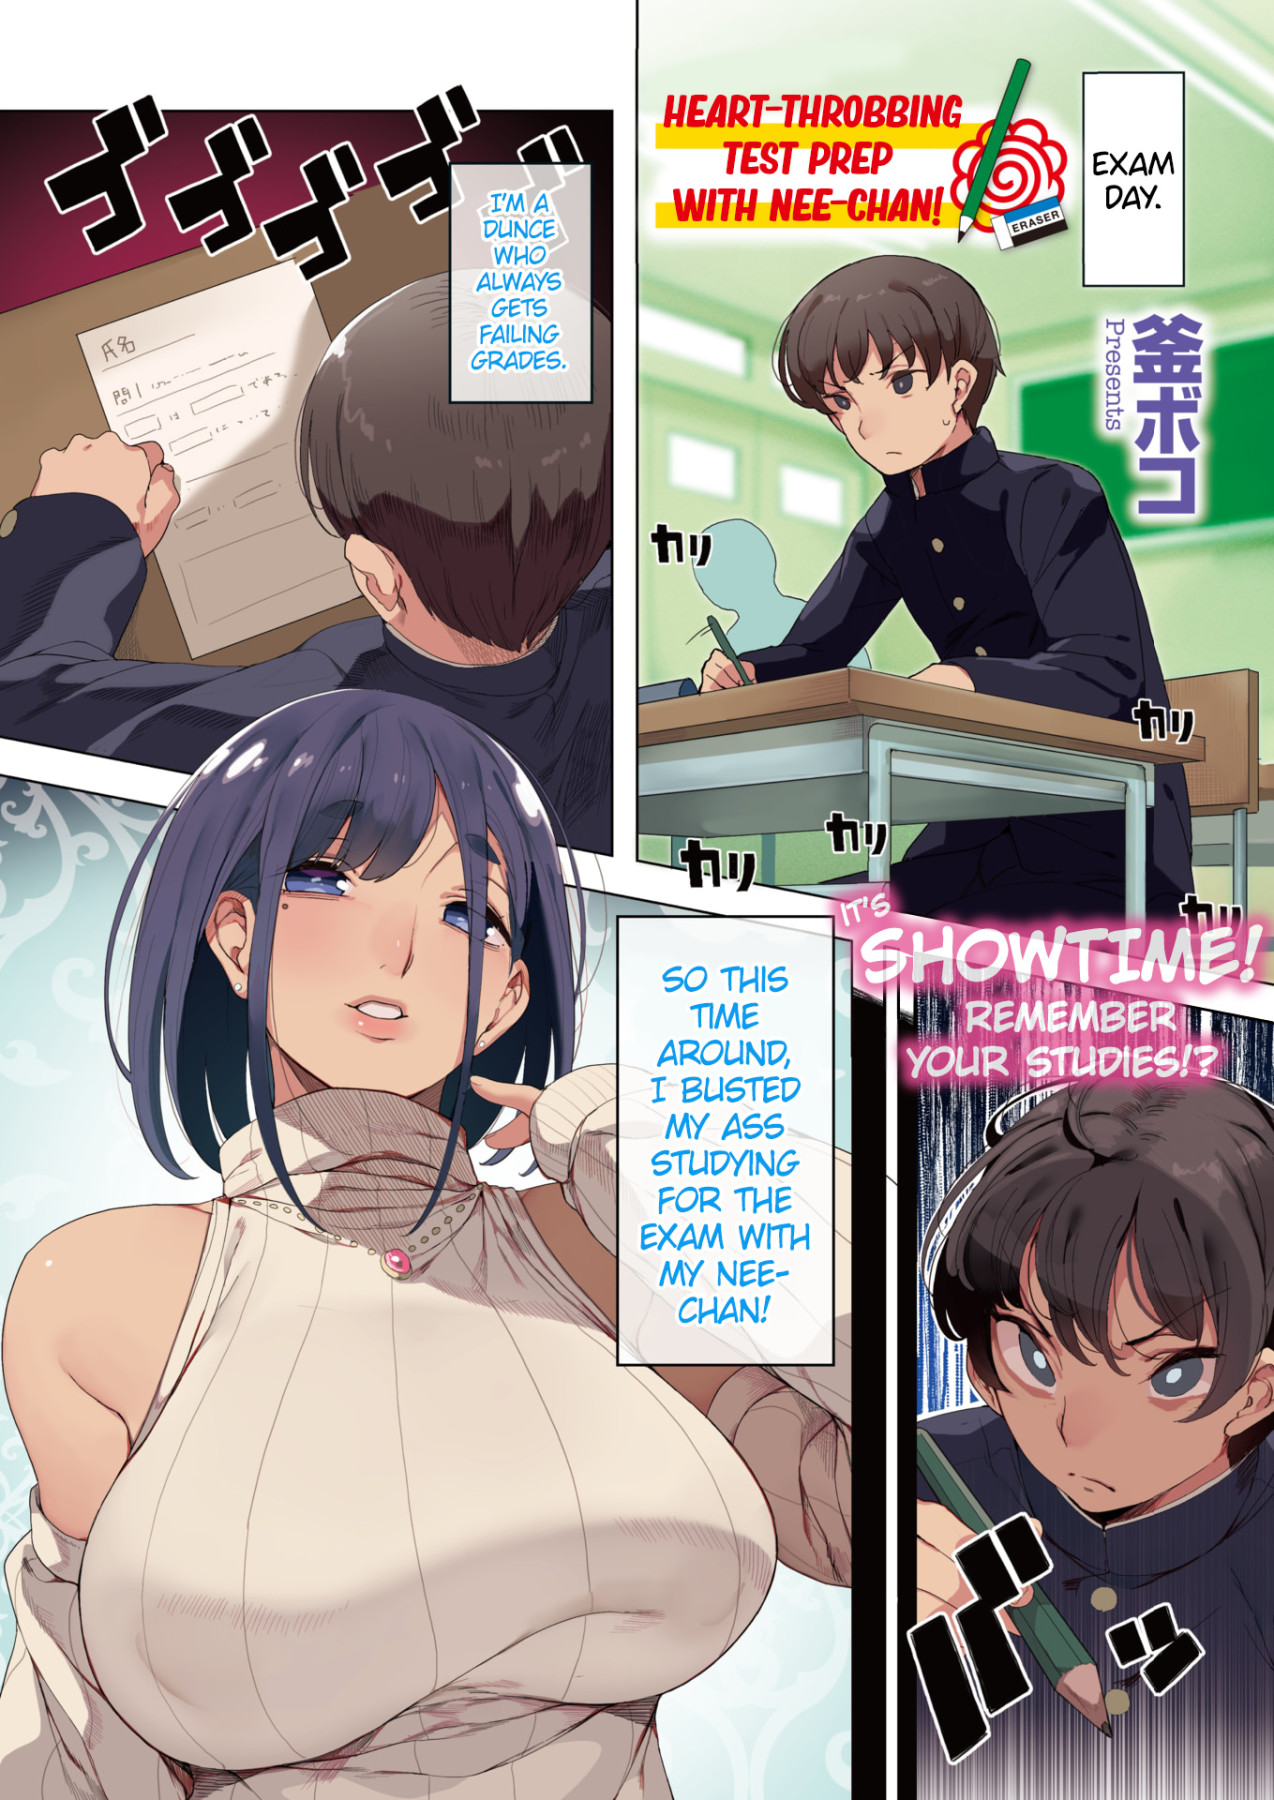 Hentai Manga Comic-Heart-Throbbing Test Prep with Nee-chan!-Read-1